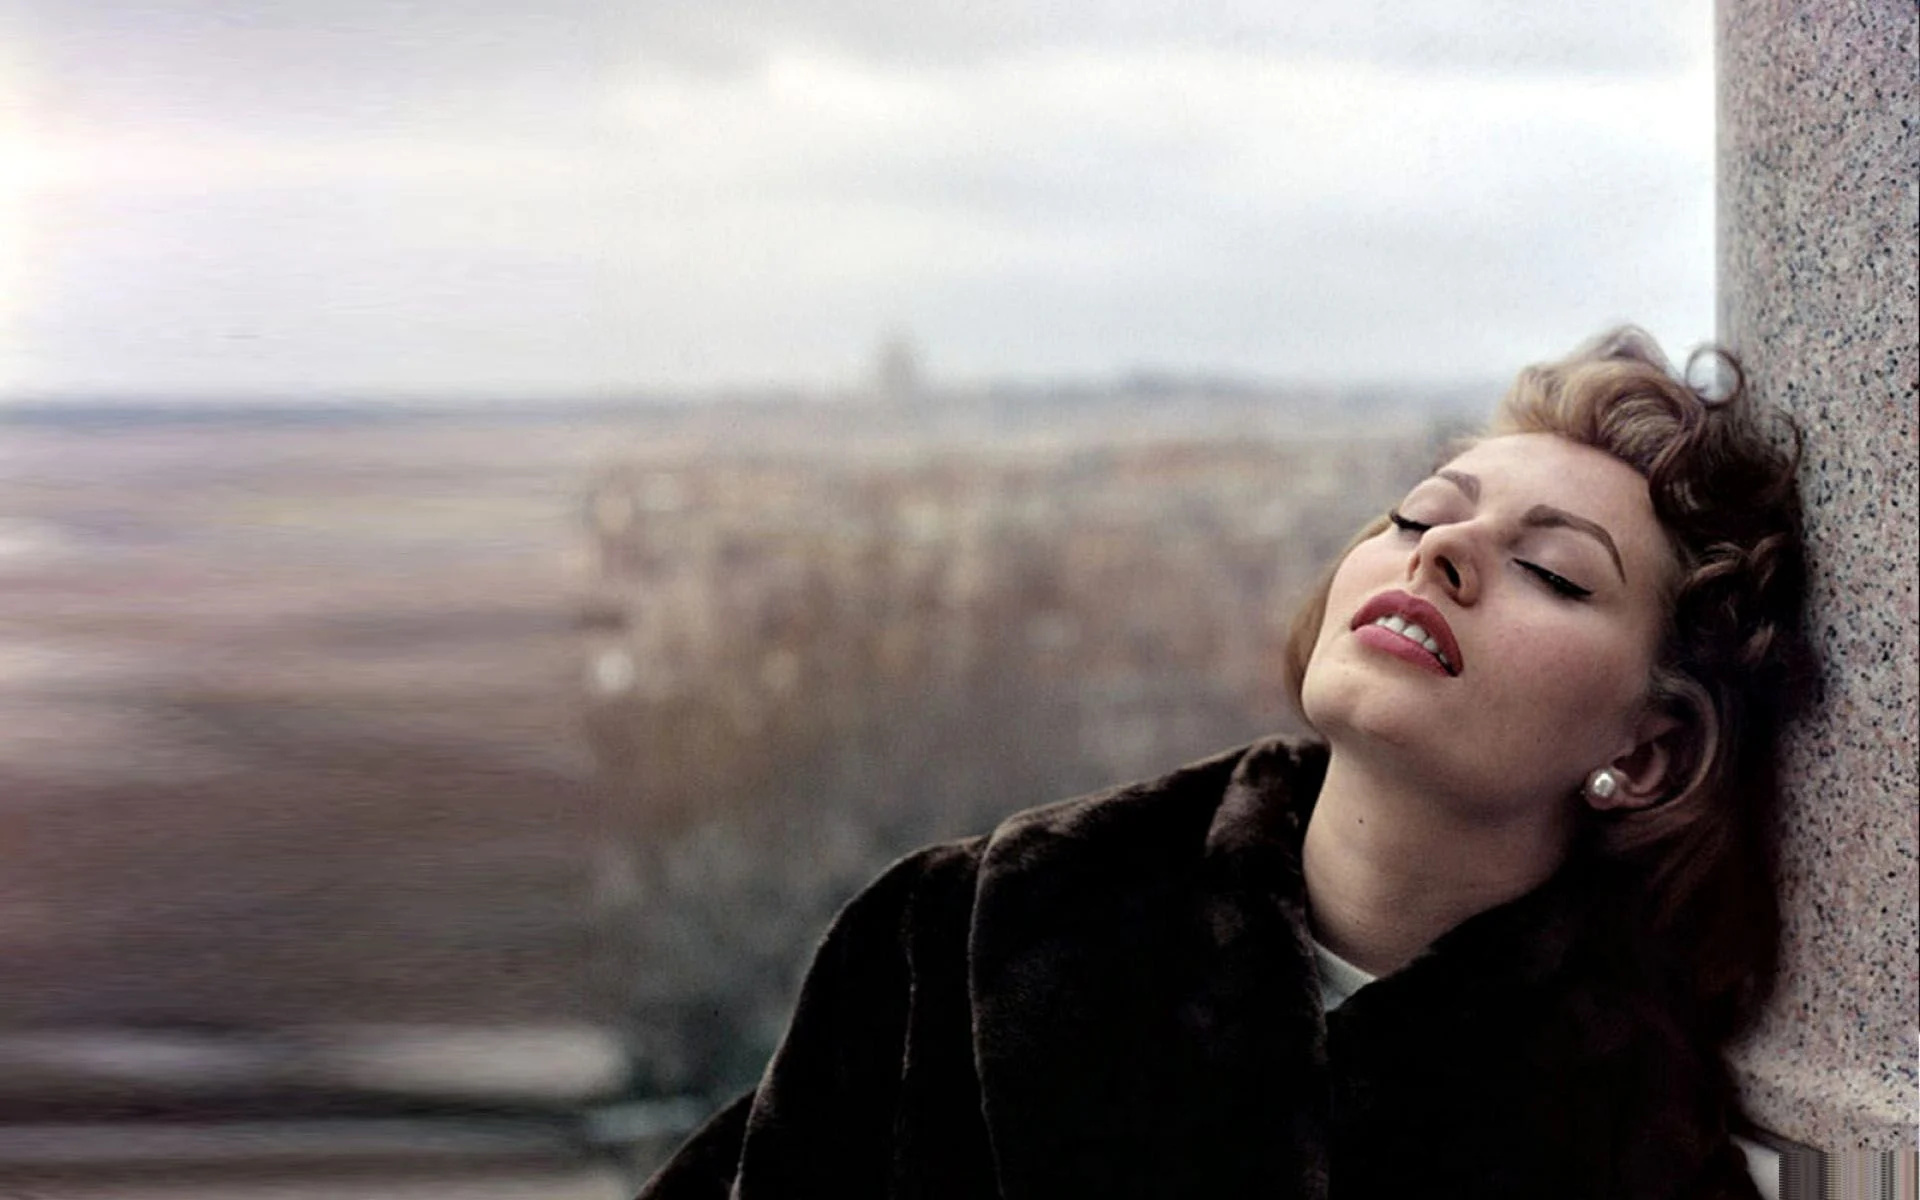 Sophia Loren movies, Top wallpapers, Stunning backgrounds, Classic beauty, 1920x1200 HD Desktop